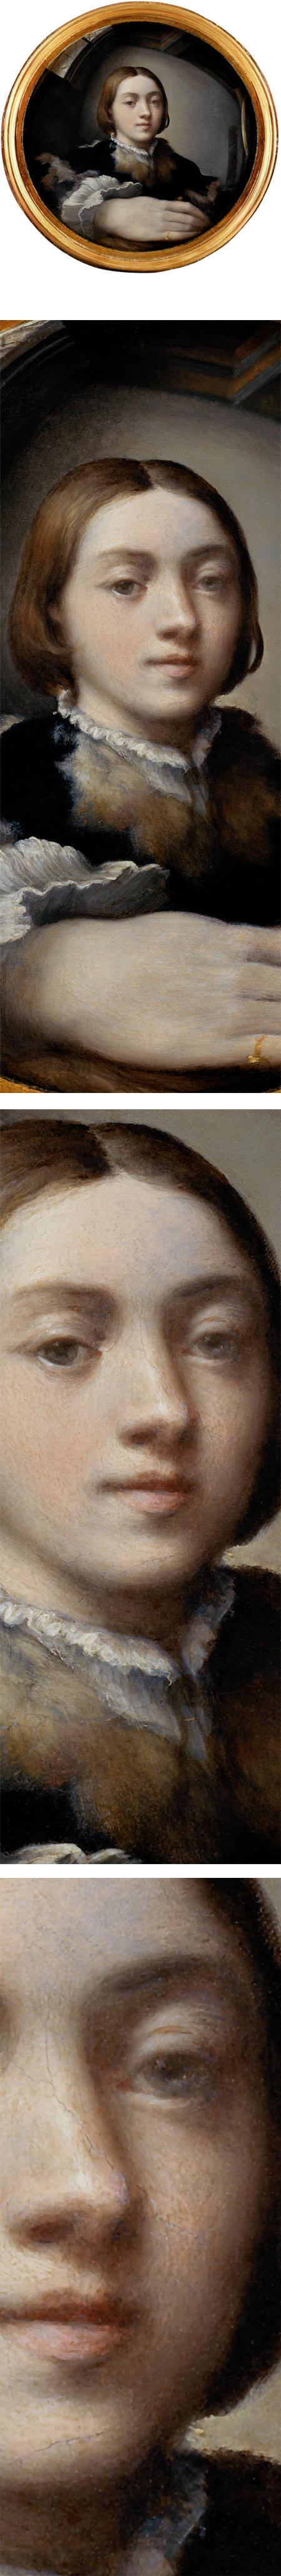 Self-Portrait in a Convex Mirror; Francesco Mazzola, called Parmigianino